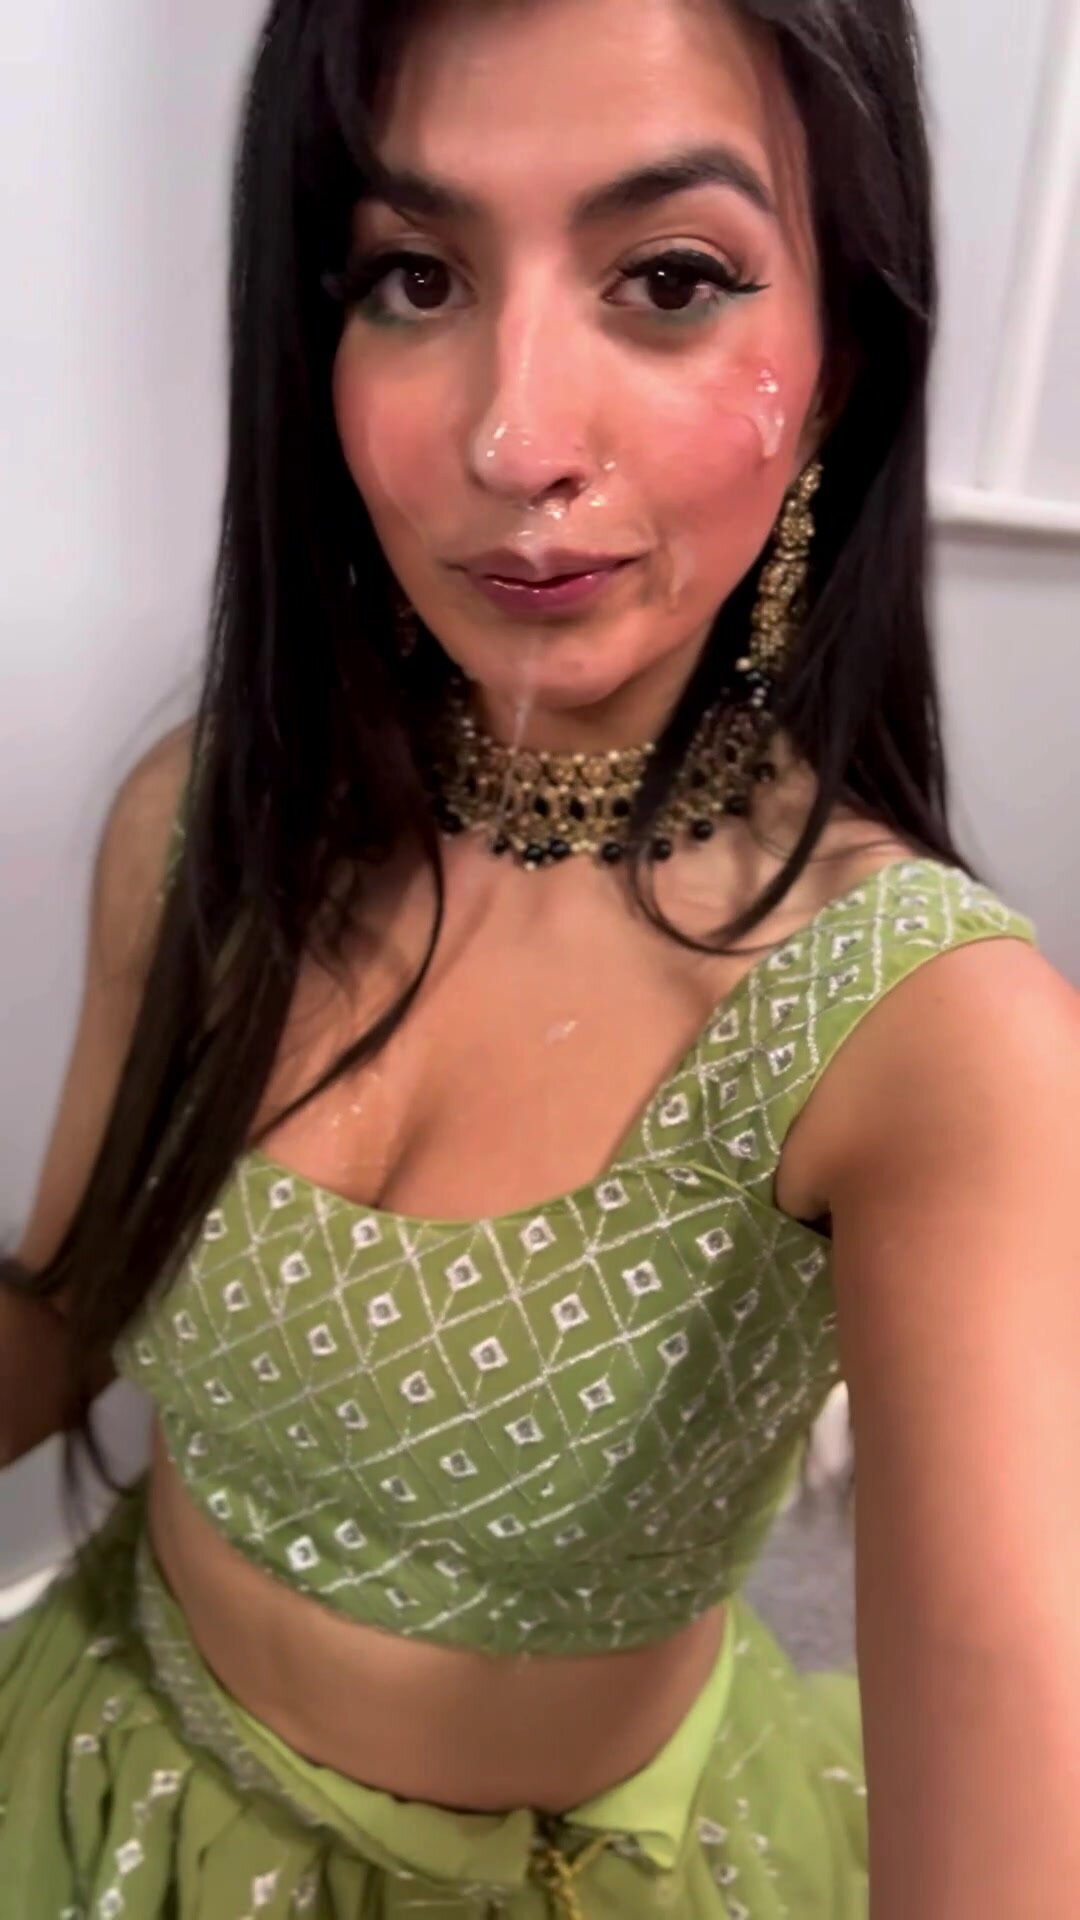 I feel like a pretty Pakistani princess covered in cum